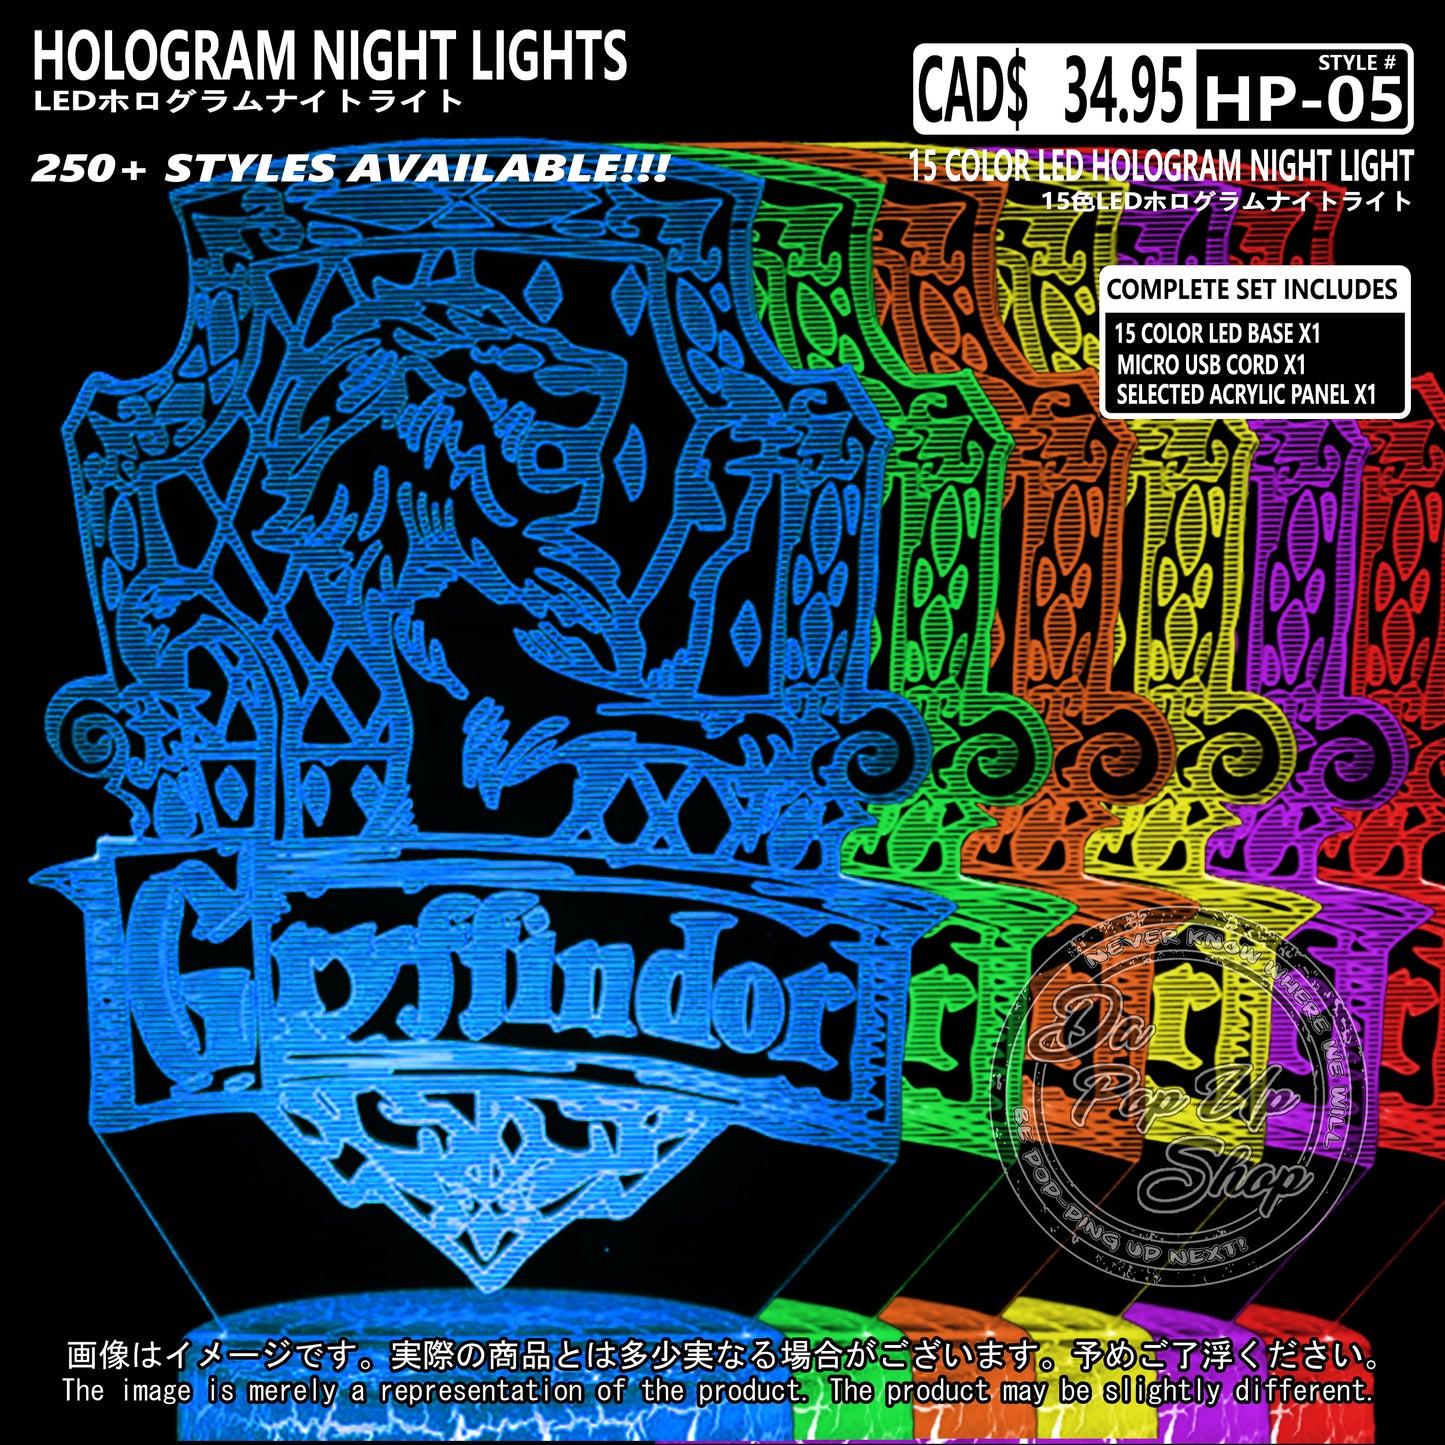 (HP-05) Harry Potter Hologram LED Night Light